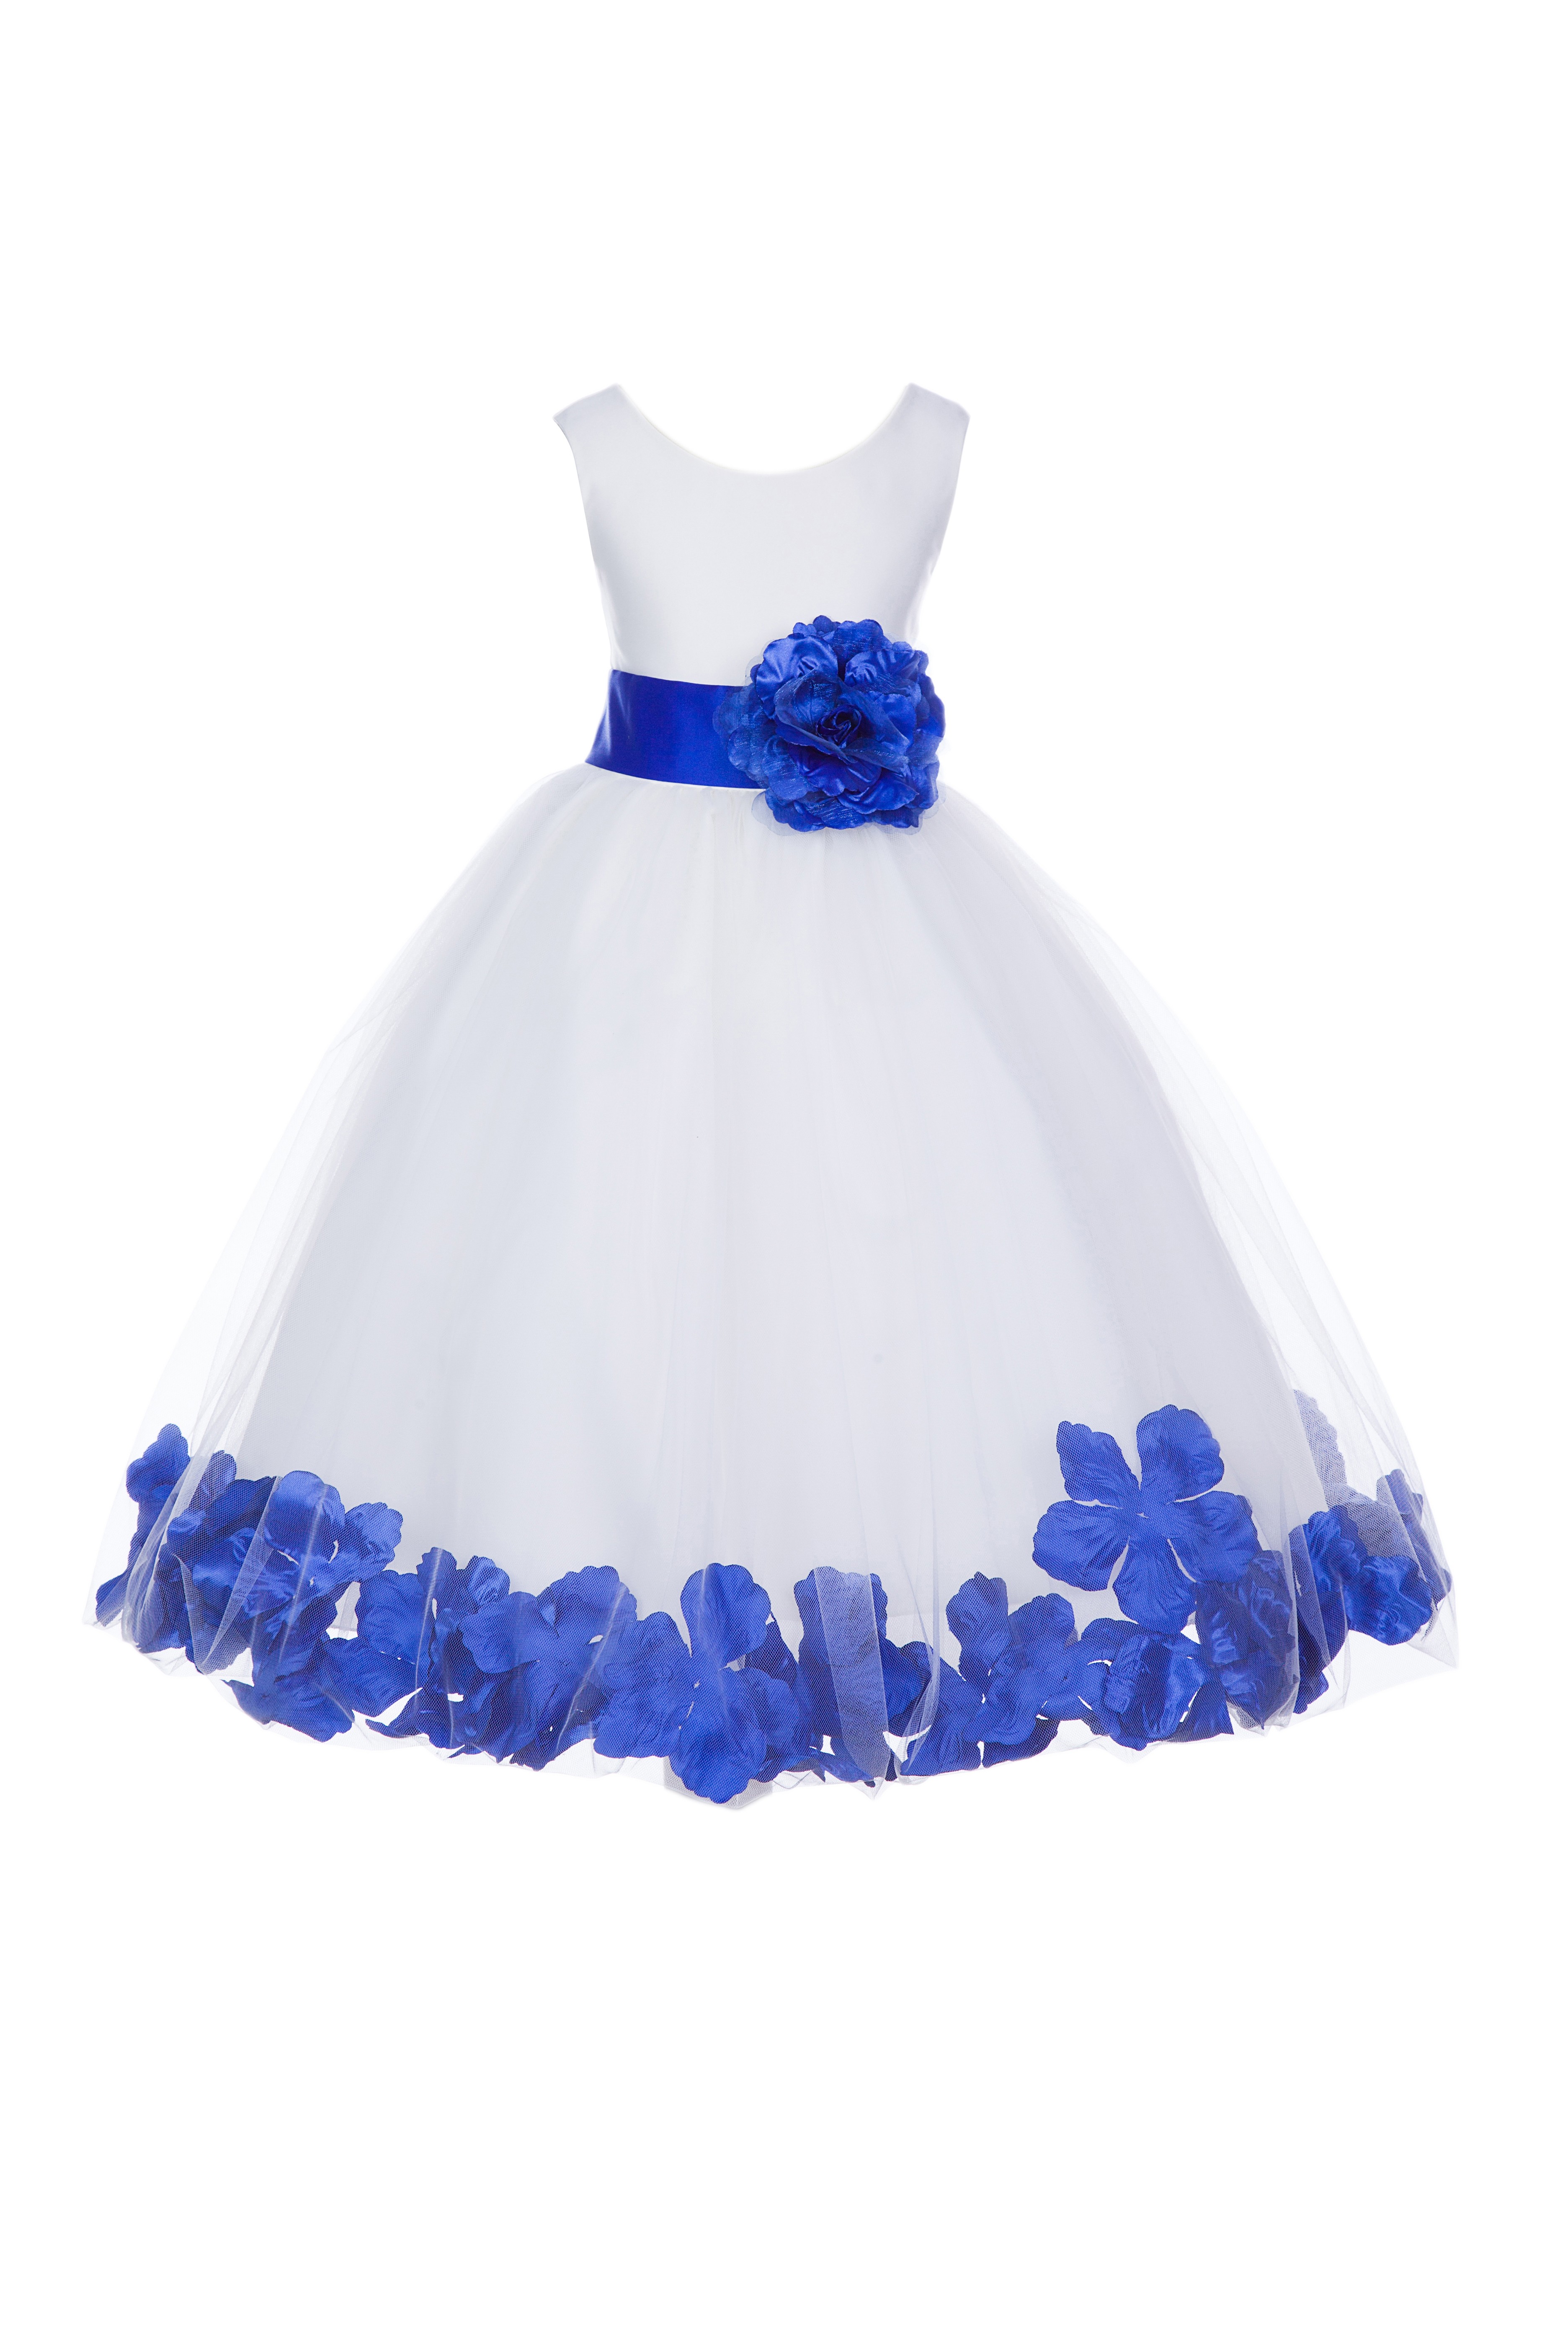 Ivory/Horizon Tulle Rose Petals Flower Girl Dress Pageant 302S